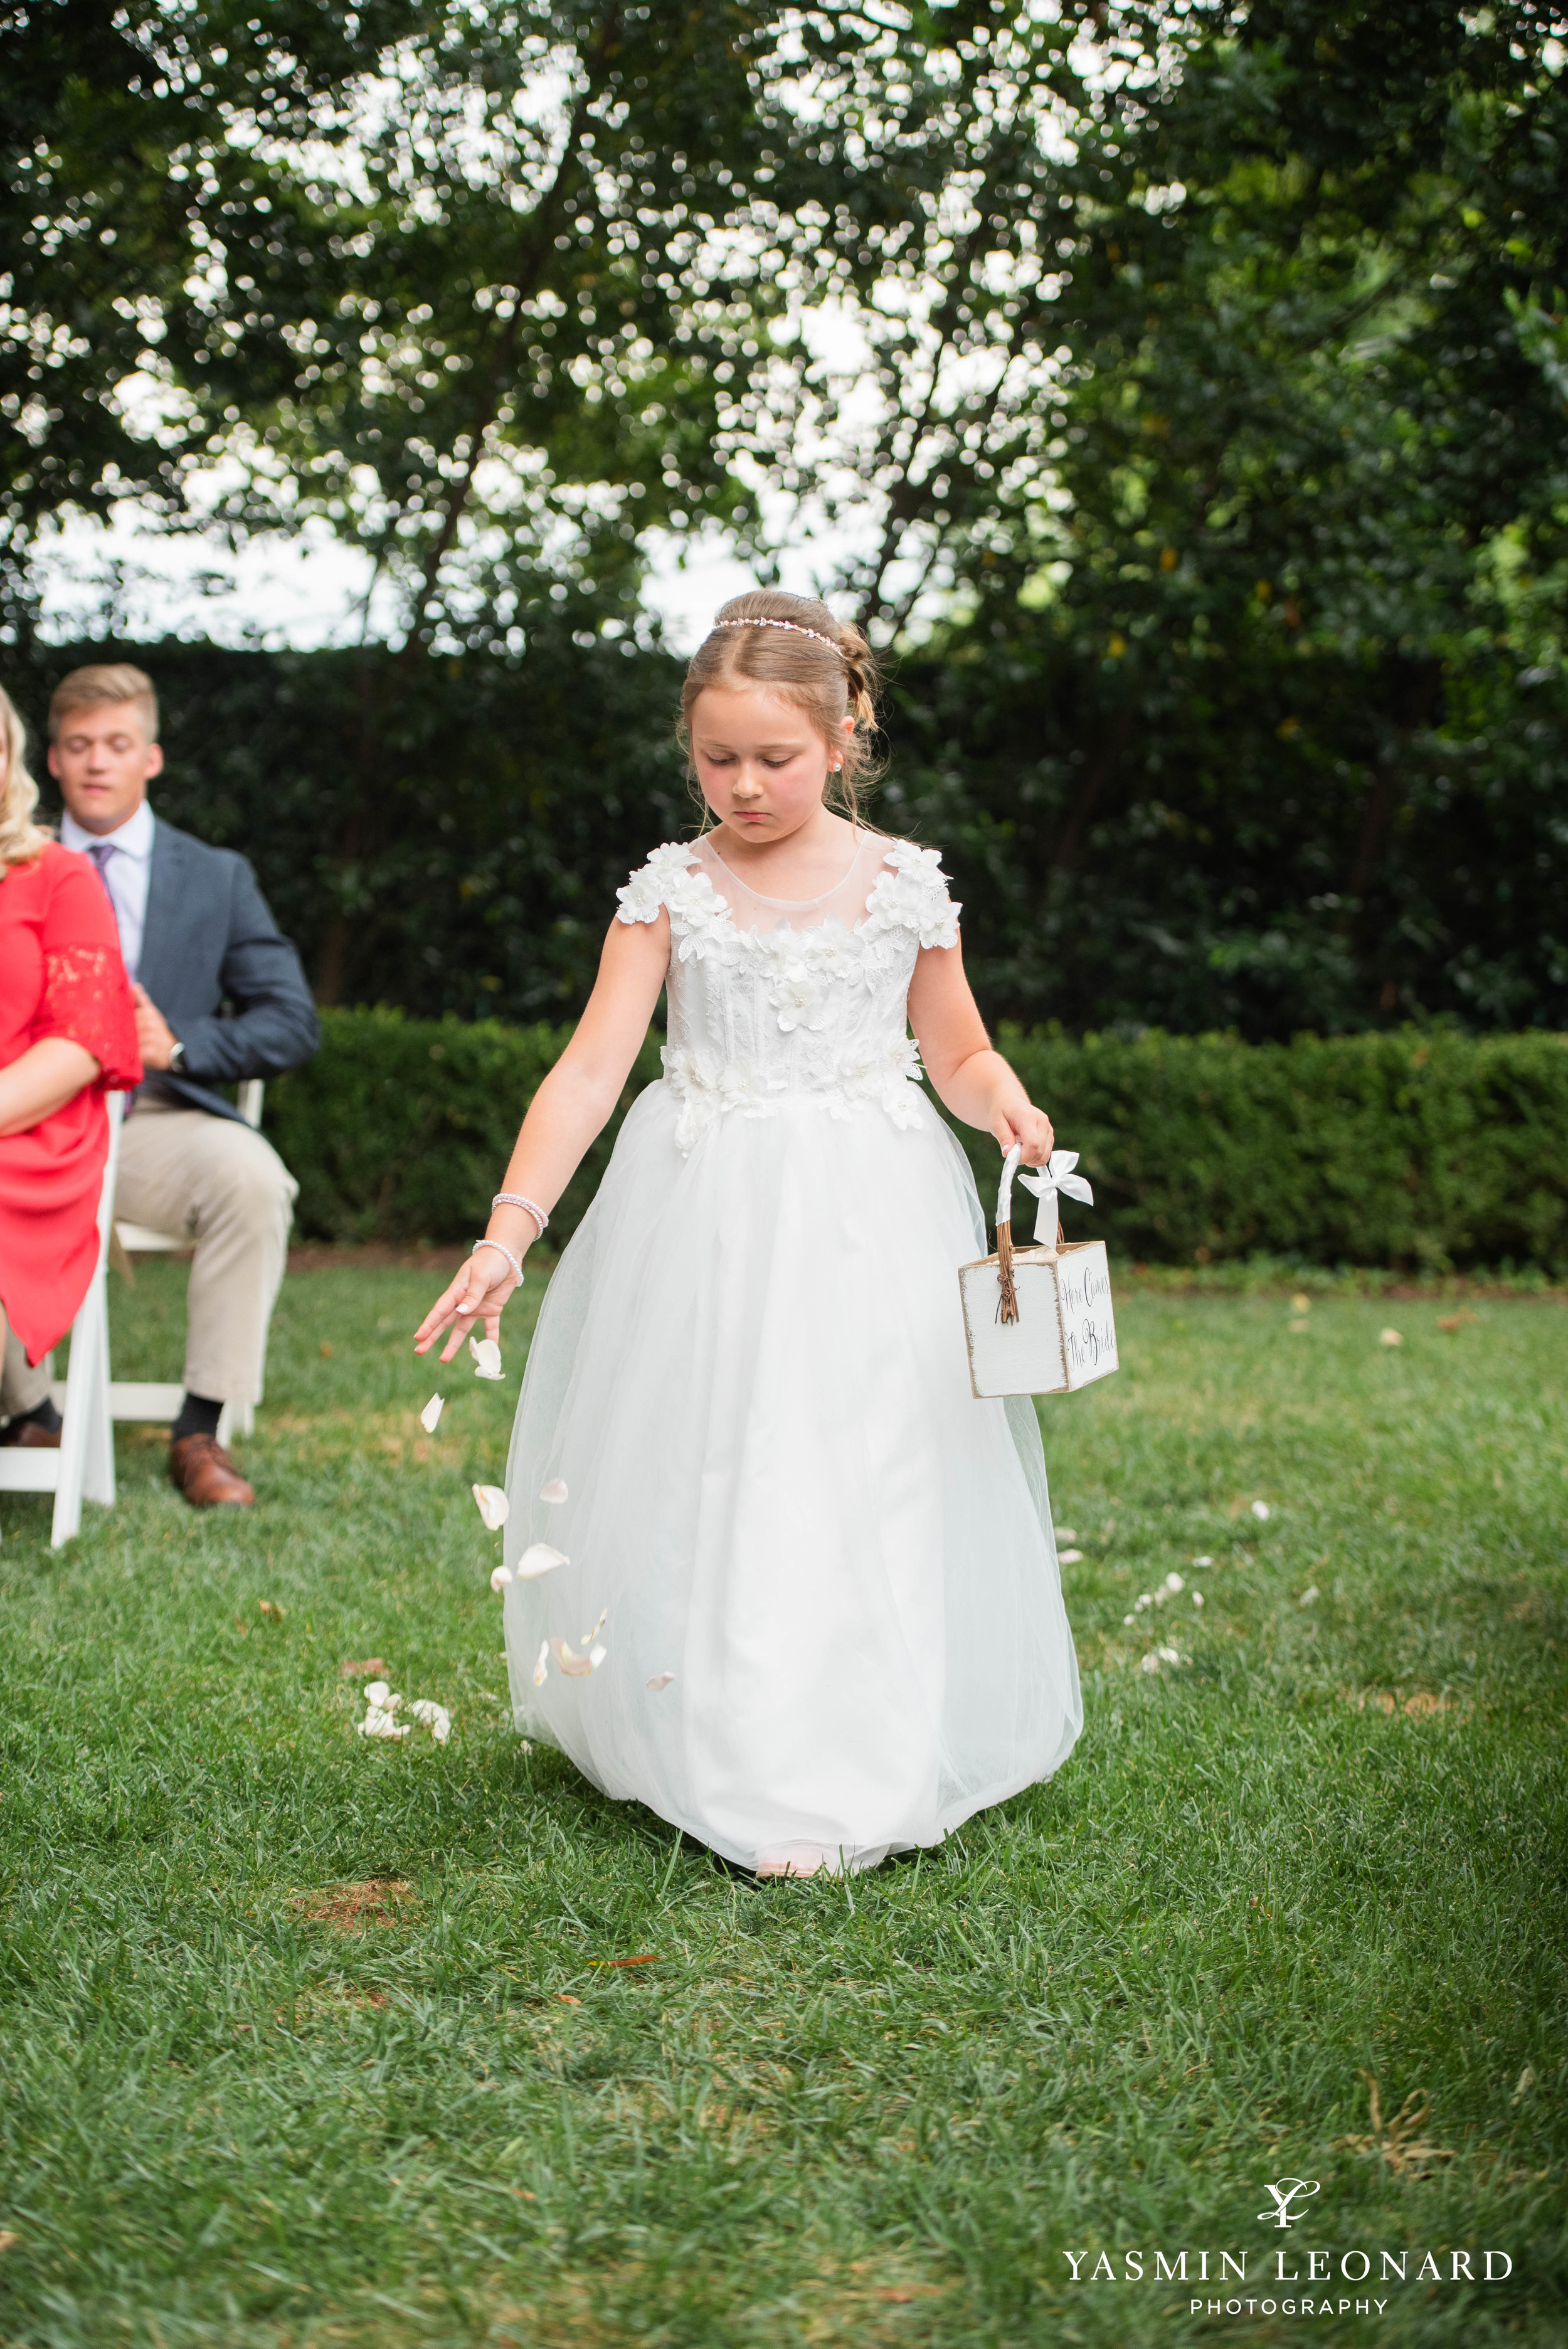 Separk Mansion - NC Weddings - Gastonia Wedding - NC Wedding Venues - Pink and Blue Wedding Ideas - Pink Bridesmaid Dresses - Yasmin Leonard Photography-18.jpg